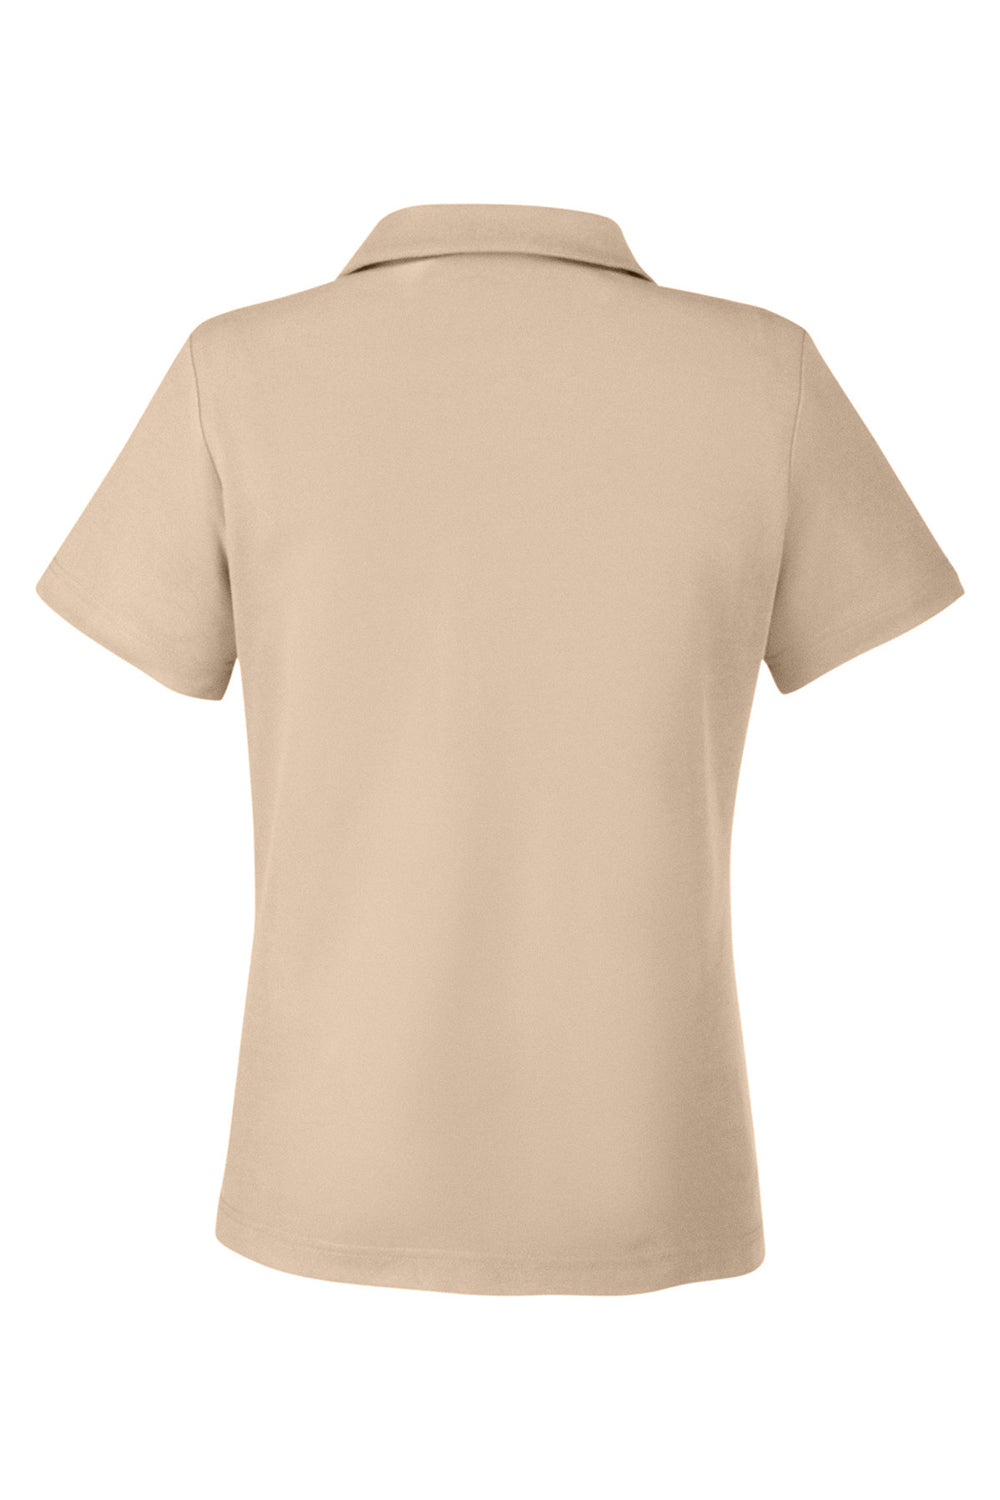 Core 365 CE112W Womens Fusion ChromaSoft Performance Moisture Wicking Pique Short Sleeve Polo Shirt Stone Flat Back